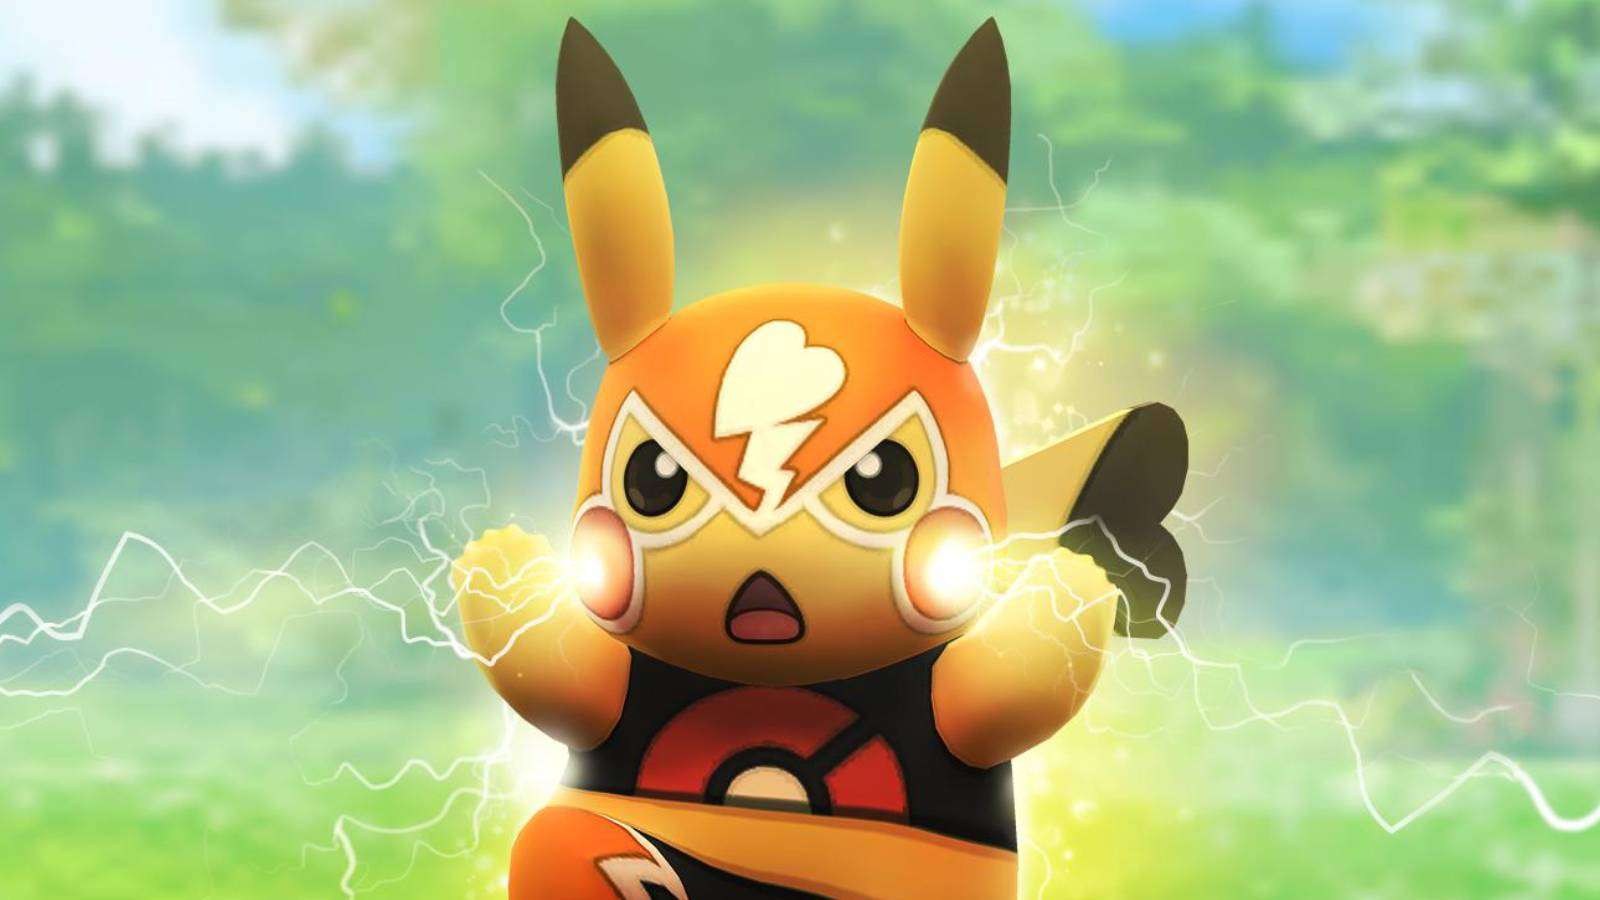 Key art shows a Pikachu in a wrestling costume